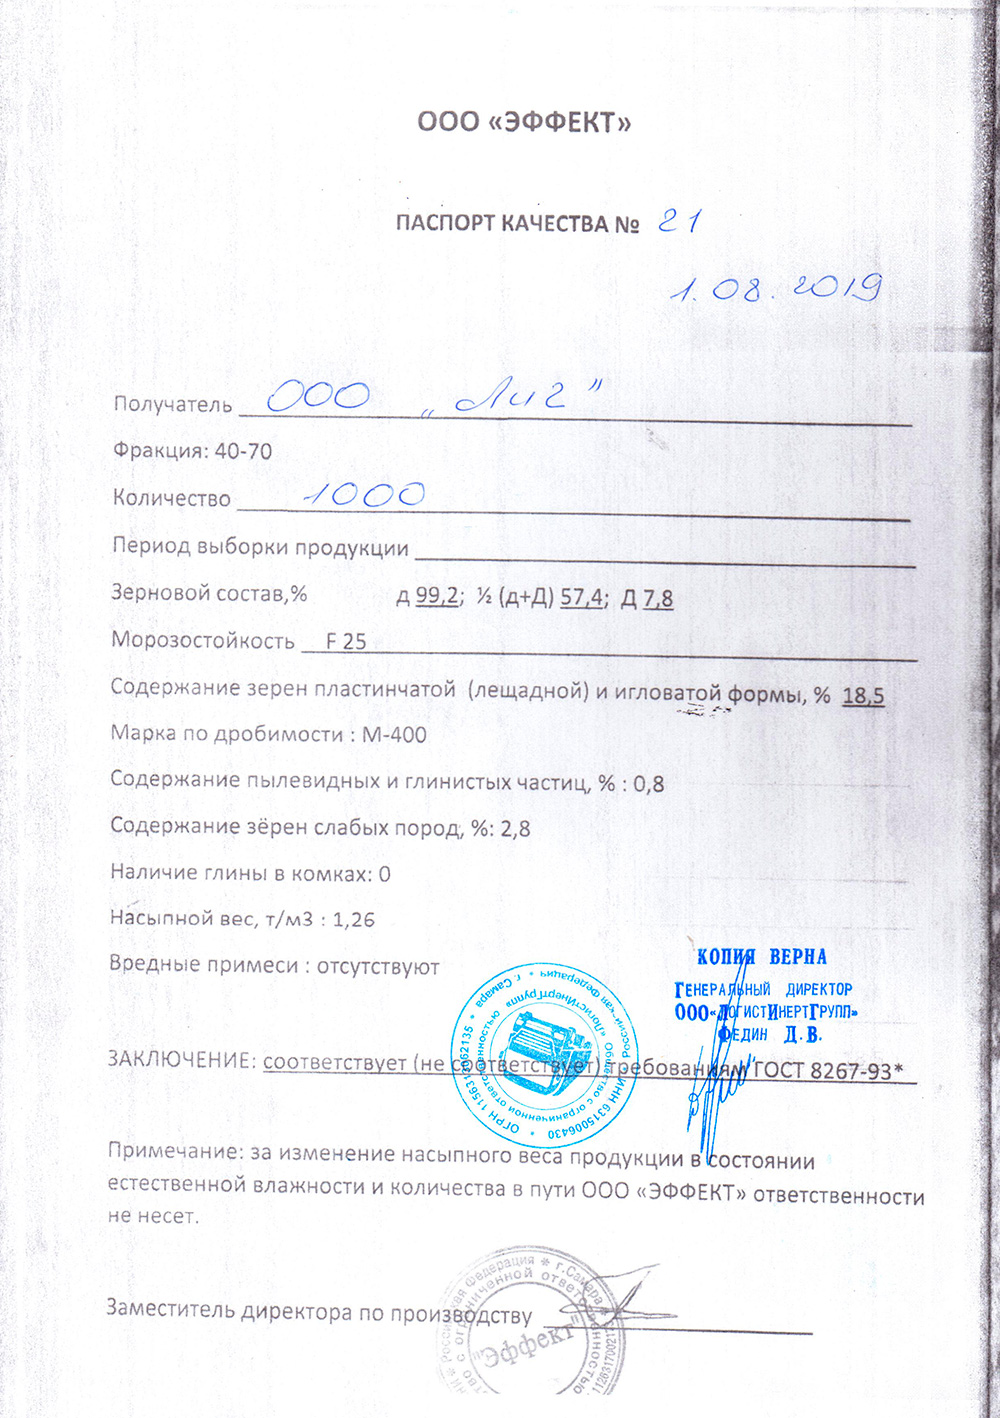 Чапаевский карьер паспорт качества